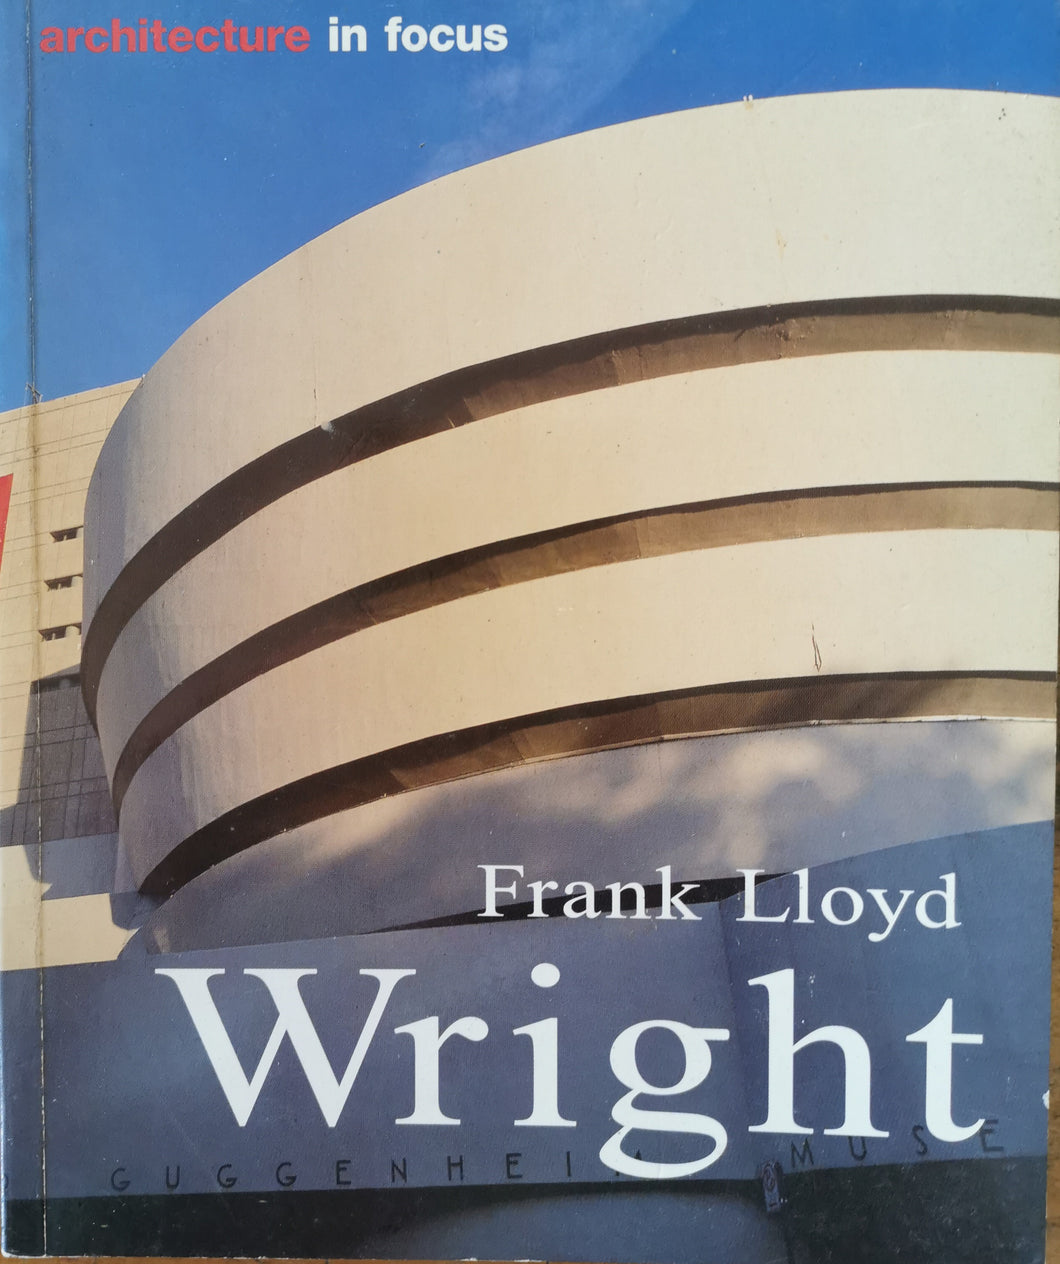 Frank Lloyd Wright - Life and Work